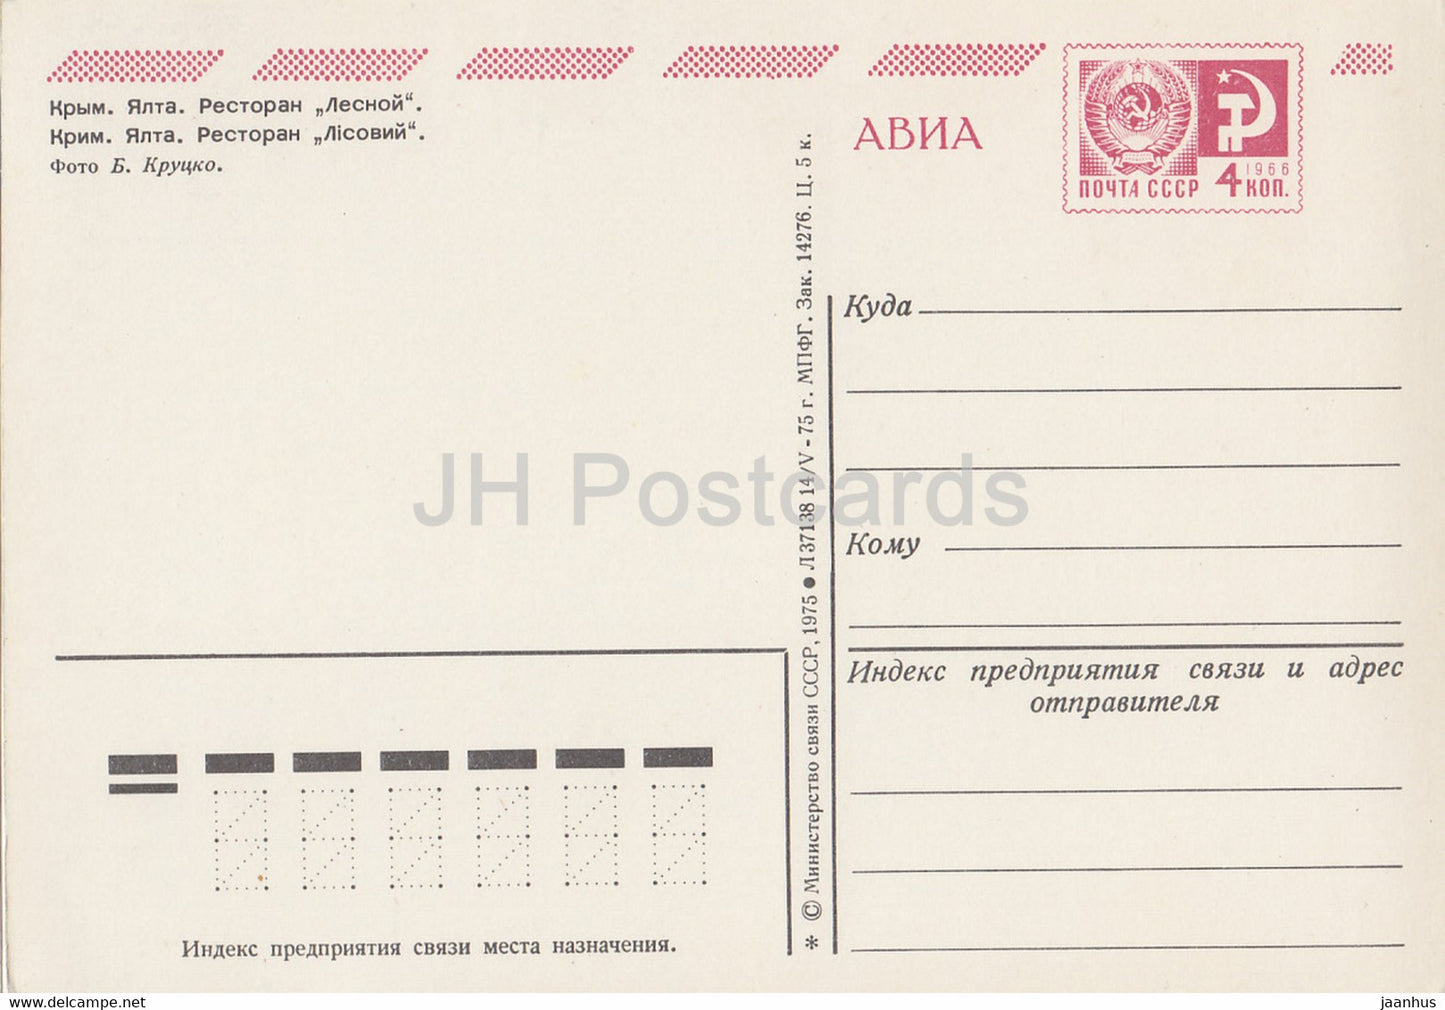 Crimée - Yalta - restaurant Lesnoy - AVIA - entier postal - 1975 - Ukraine URSS - inutilisé